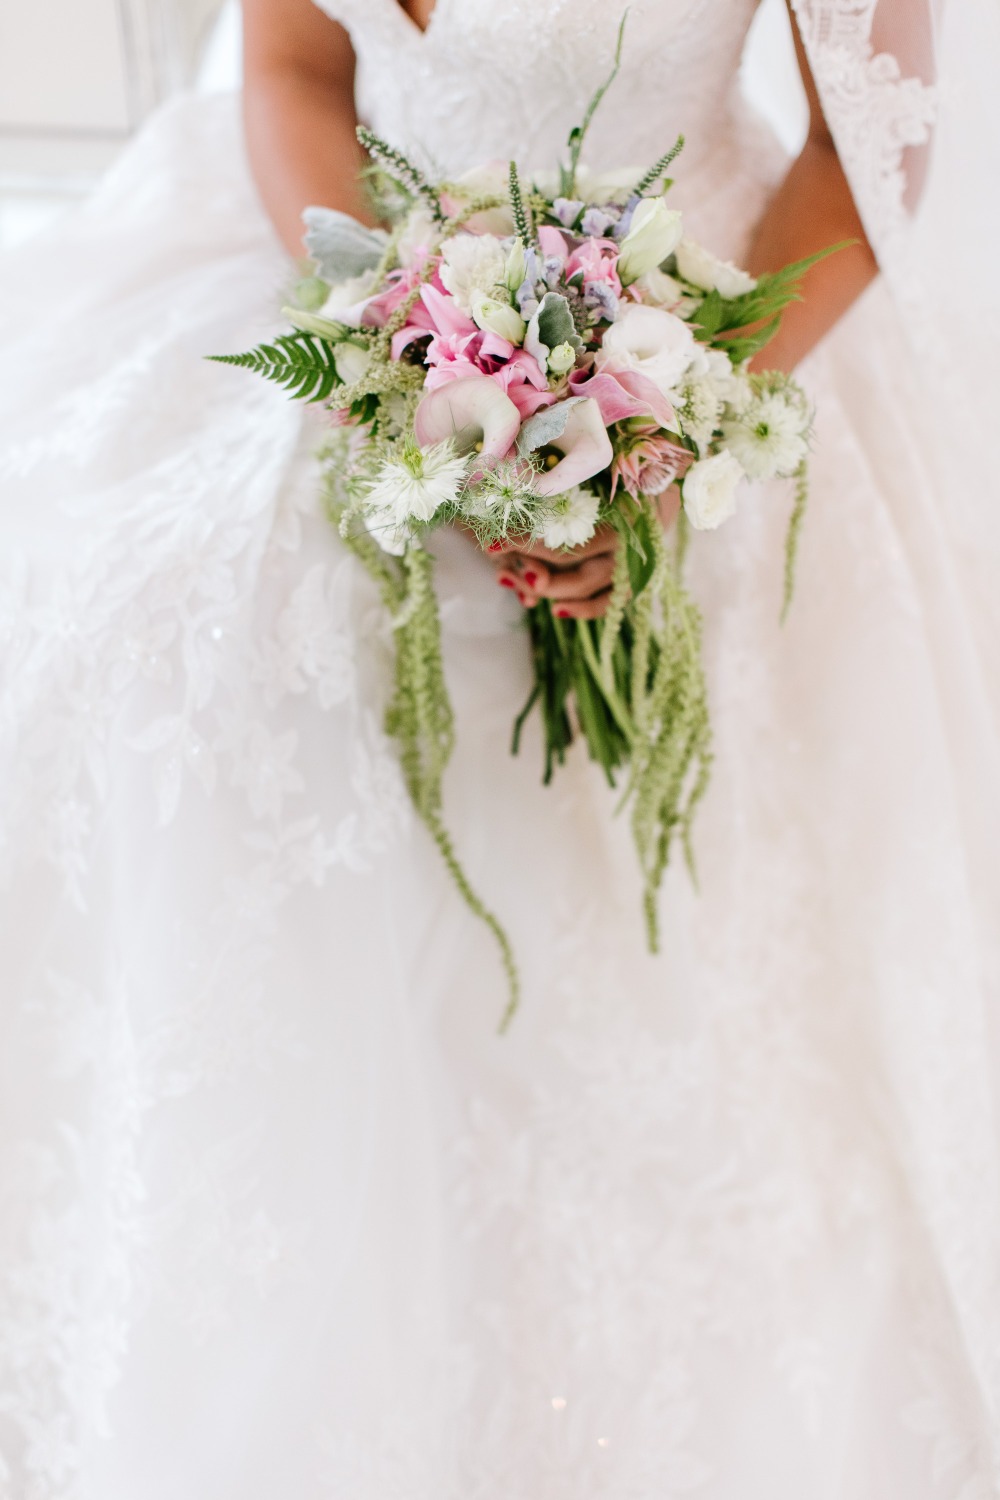 classic-bridal-looks-from-oleg-cassini